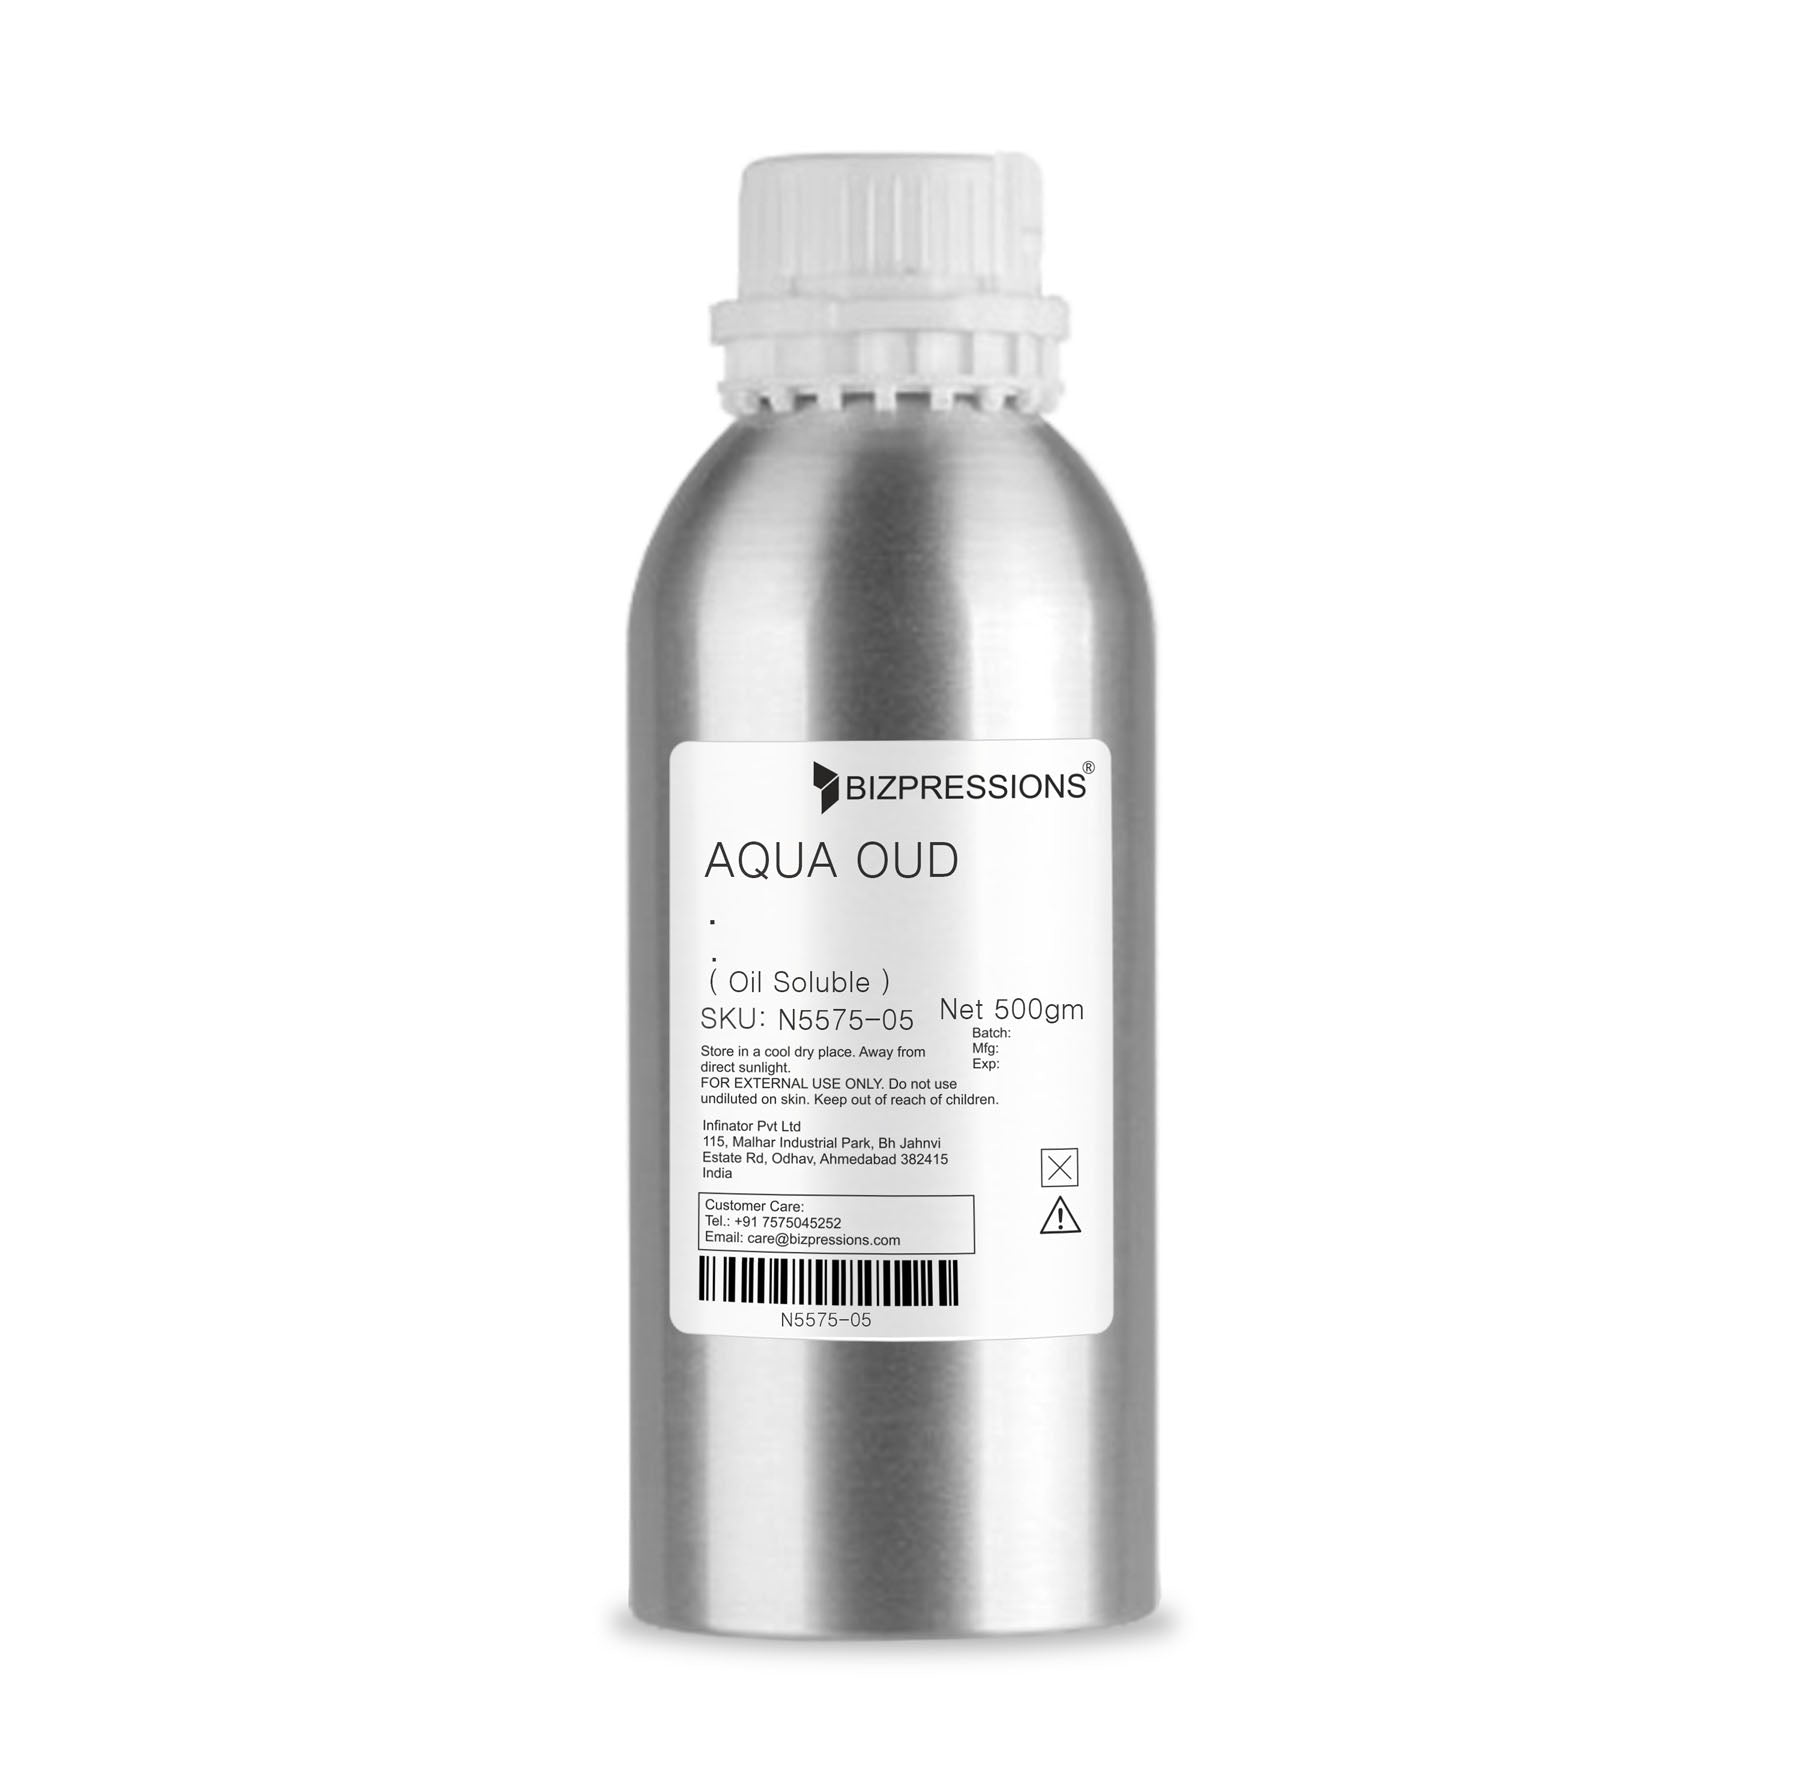 AQUA OUD - Fragrance ( Oil Soluble ) - 500 gm